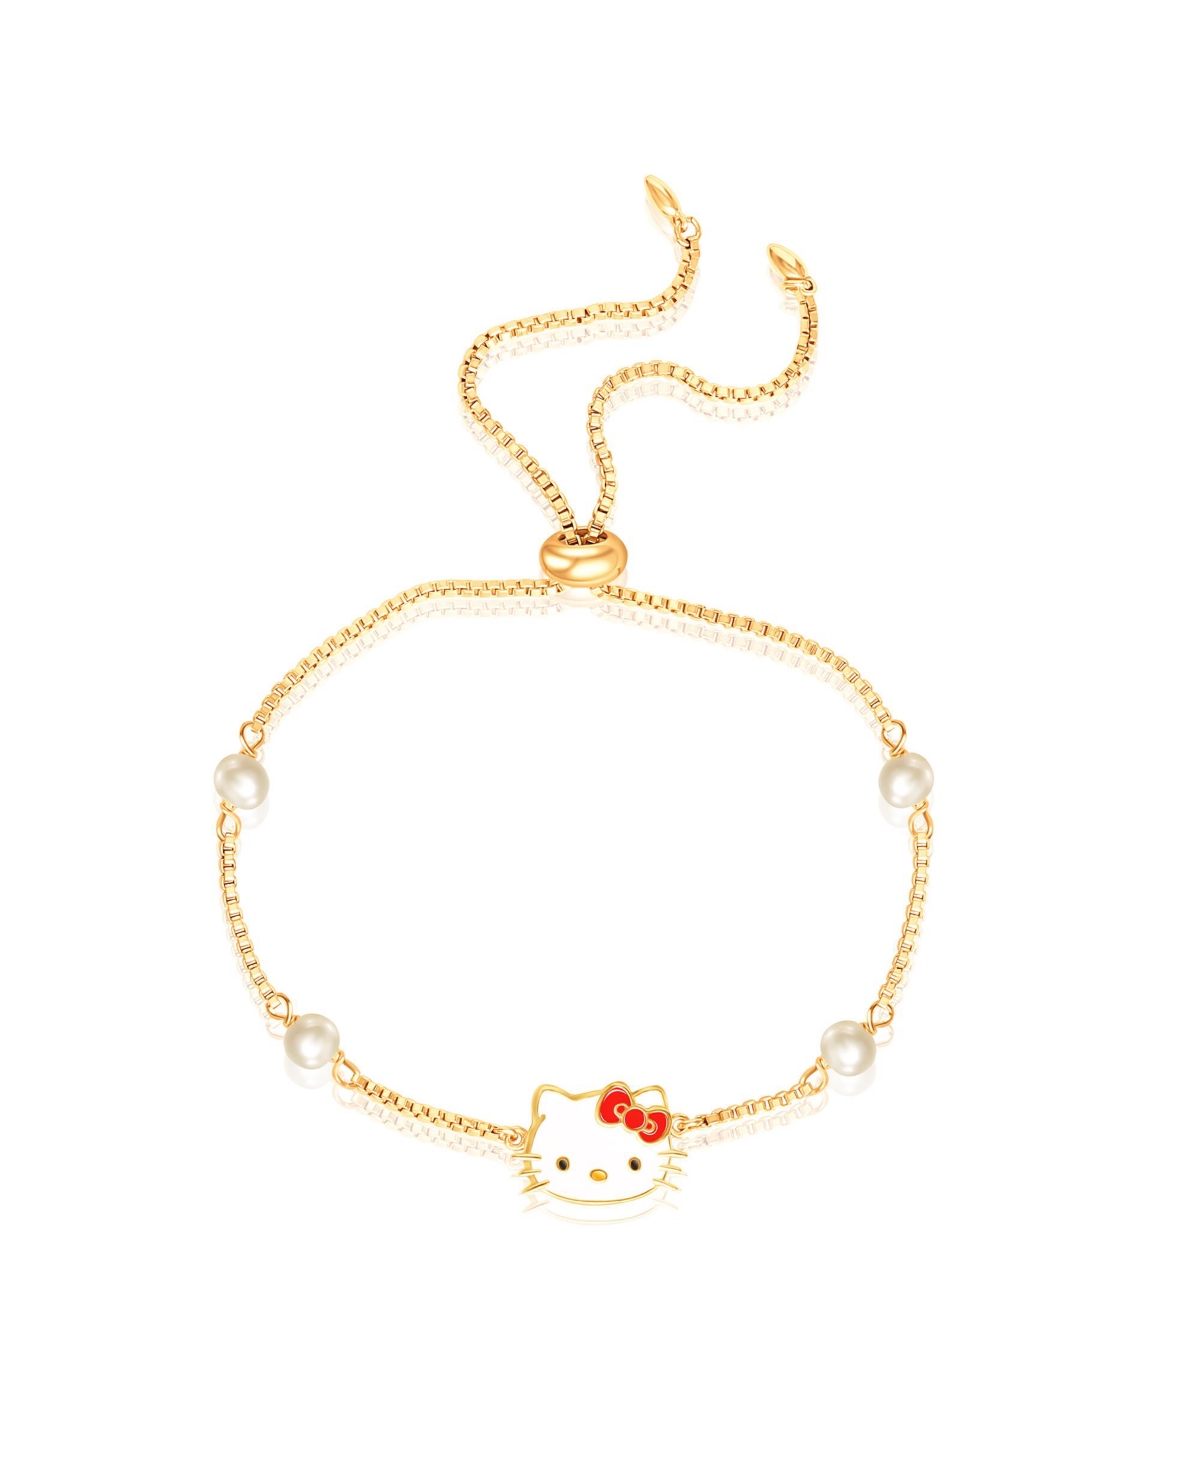 Sanrio Glass Pearl Charm Lariat Bracelet, 9.5'' Box Chain - Gold tone, red